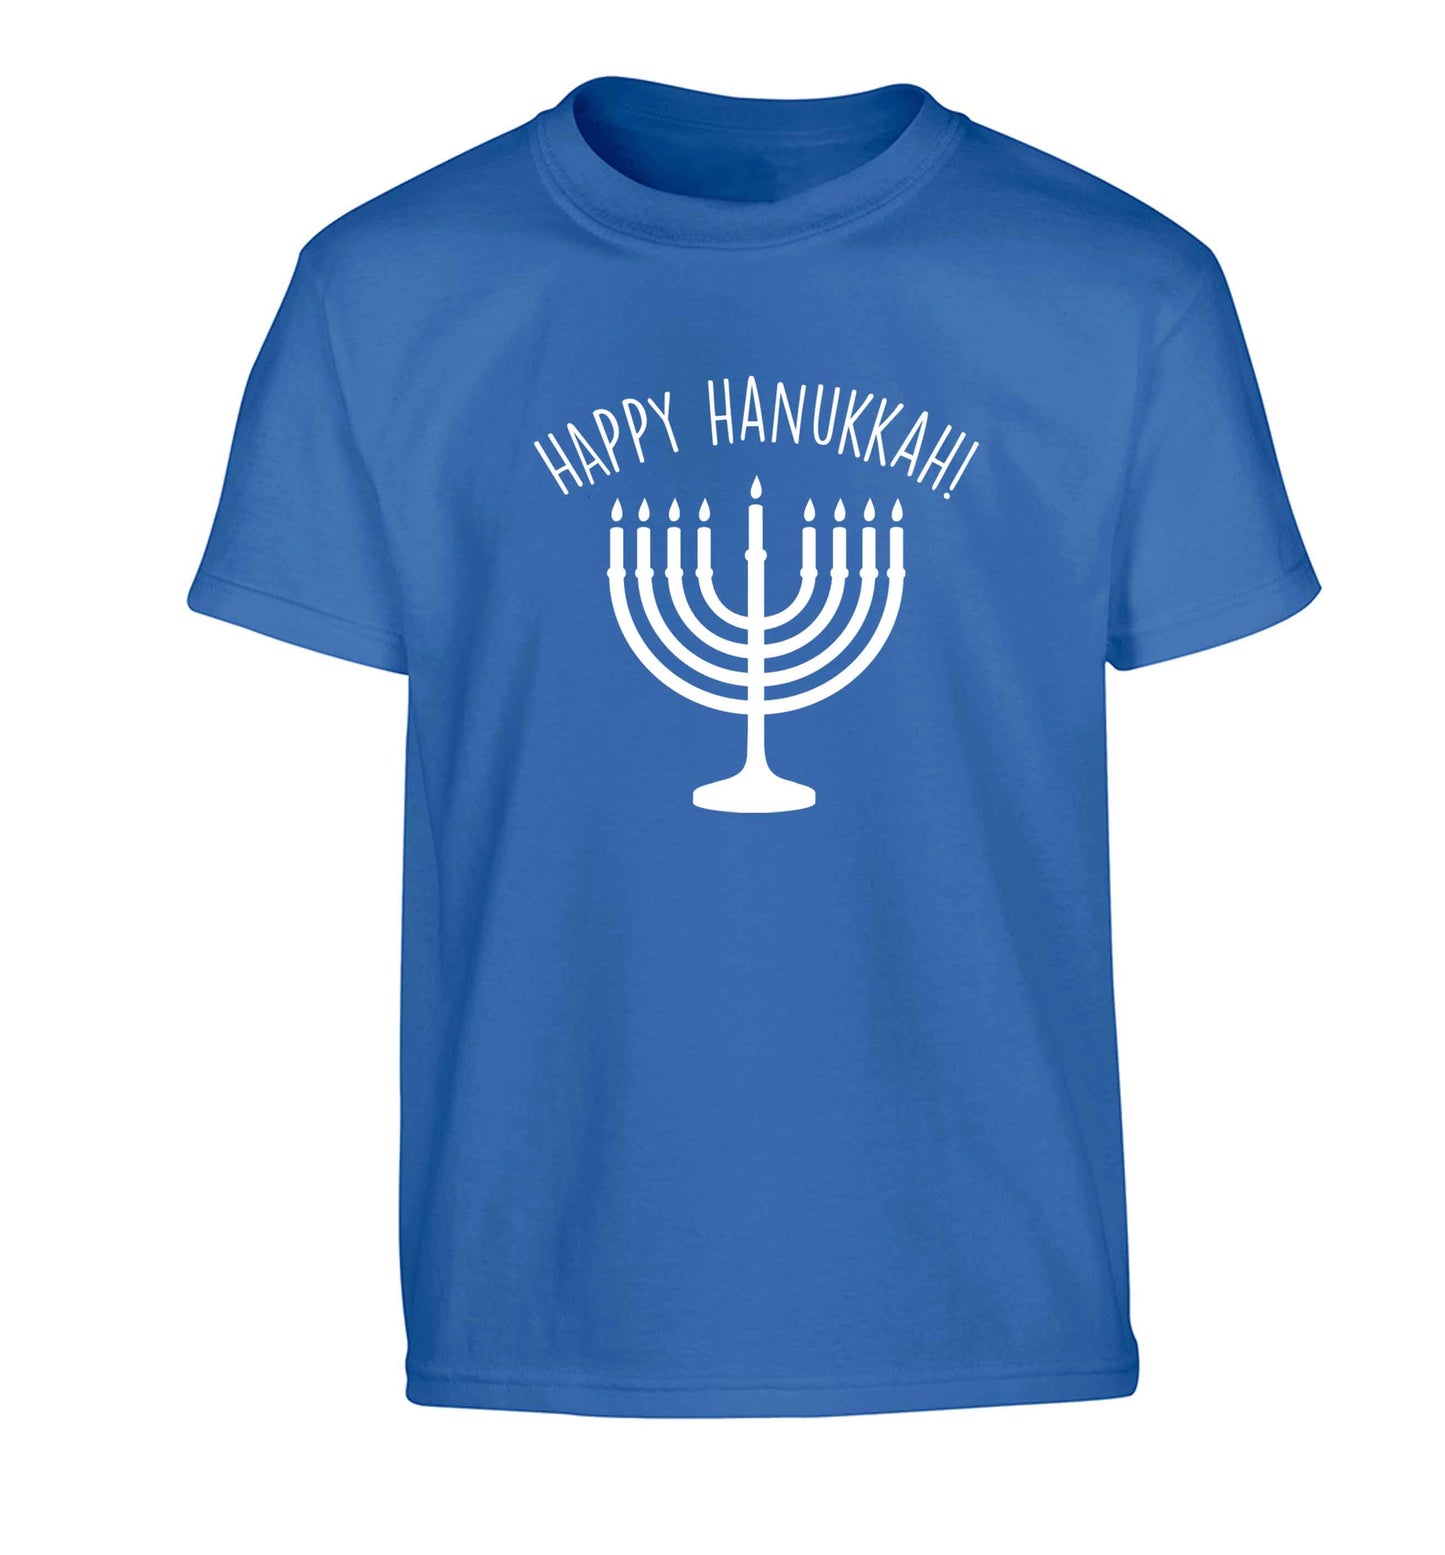 Happy hanukkah Children's blue Tshirt 12-13 Years